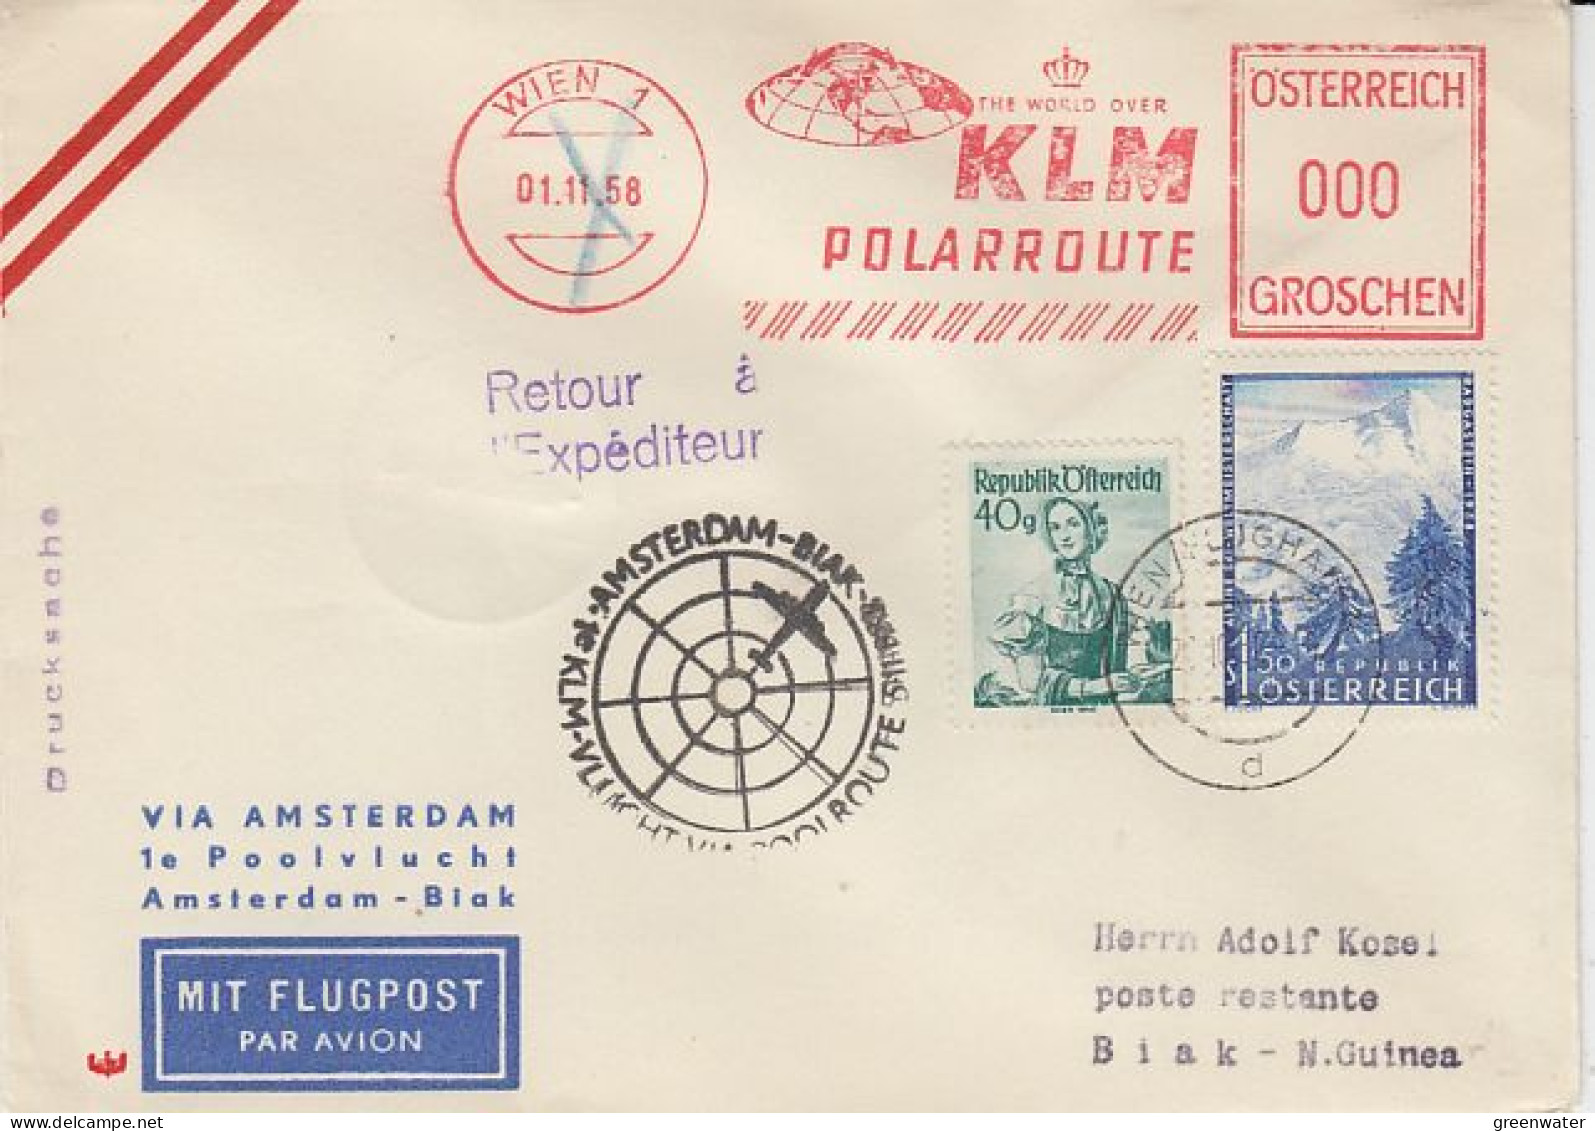 Austria 1958 KLM Polarroute 1st Flight Amsterdam- Biak New Guinea Cover (59621) - Brieven En Documenten